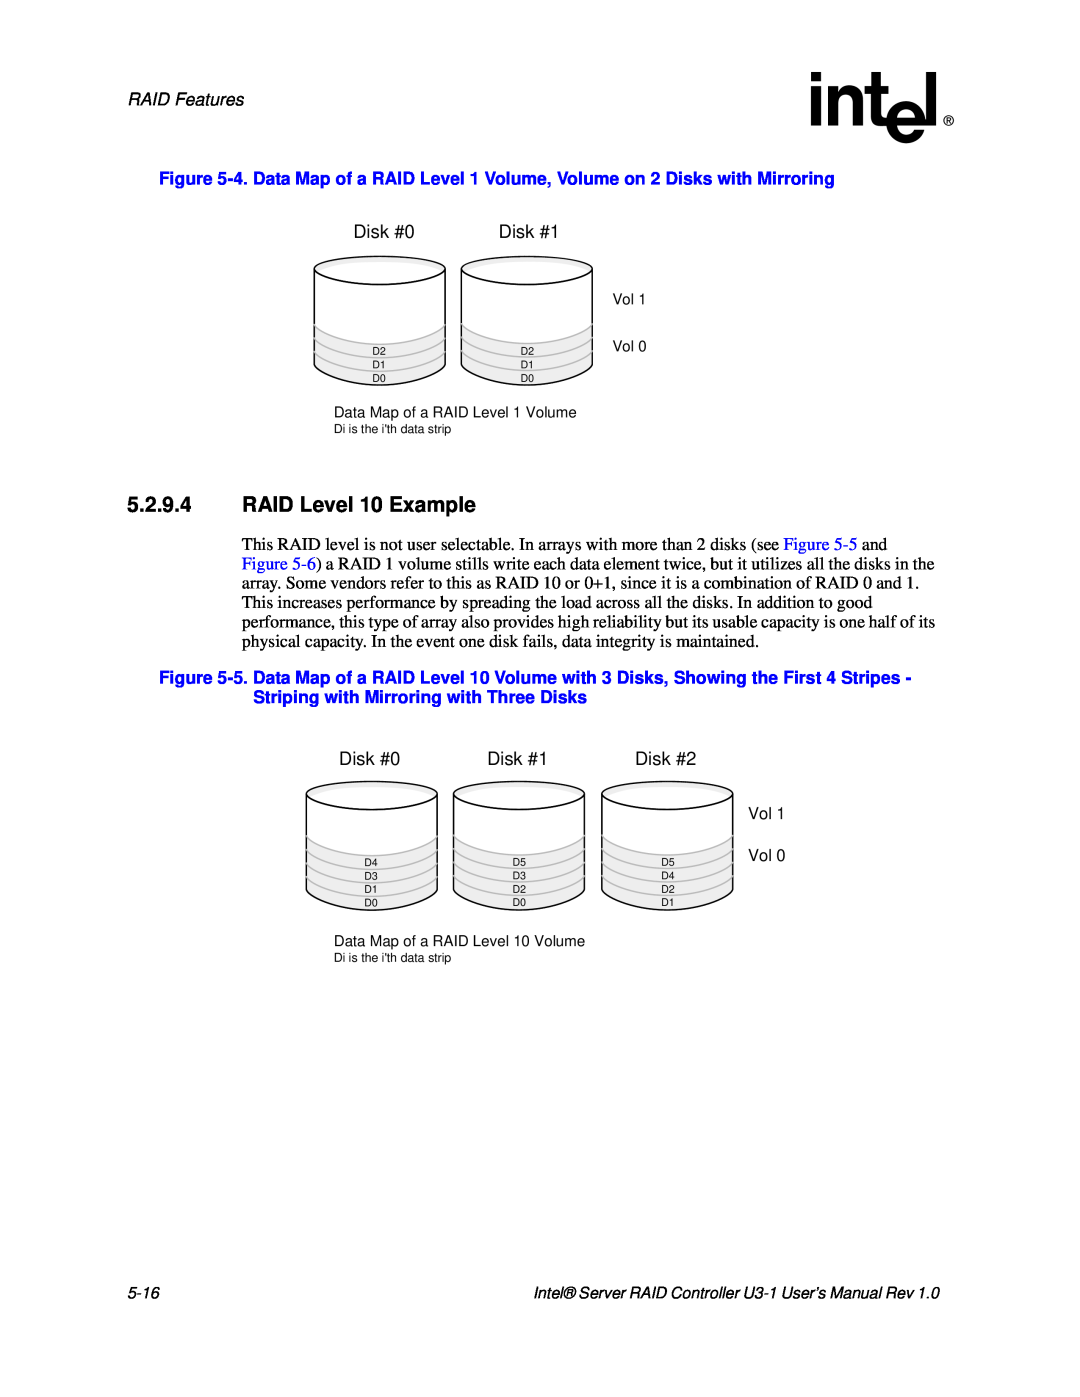 Intel SRCU31 user manual 5.2.9.4RAID Level 10 Example, Disk #0, Disk #1, RAID Features 